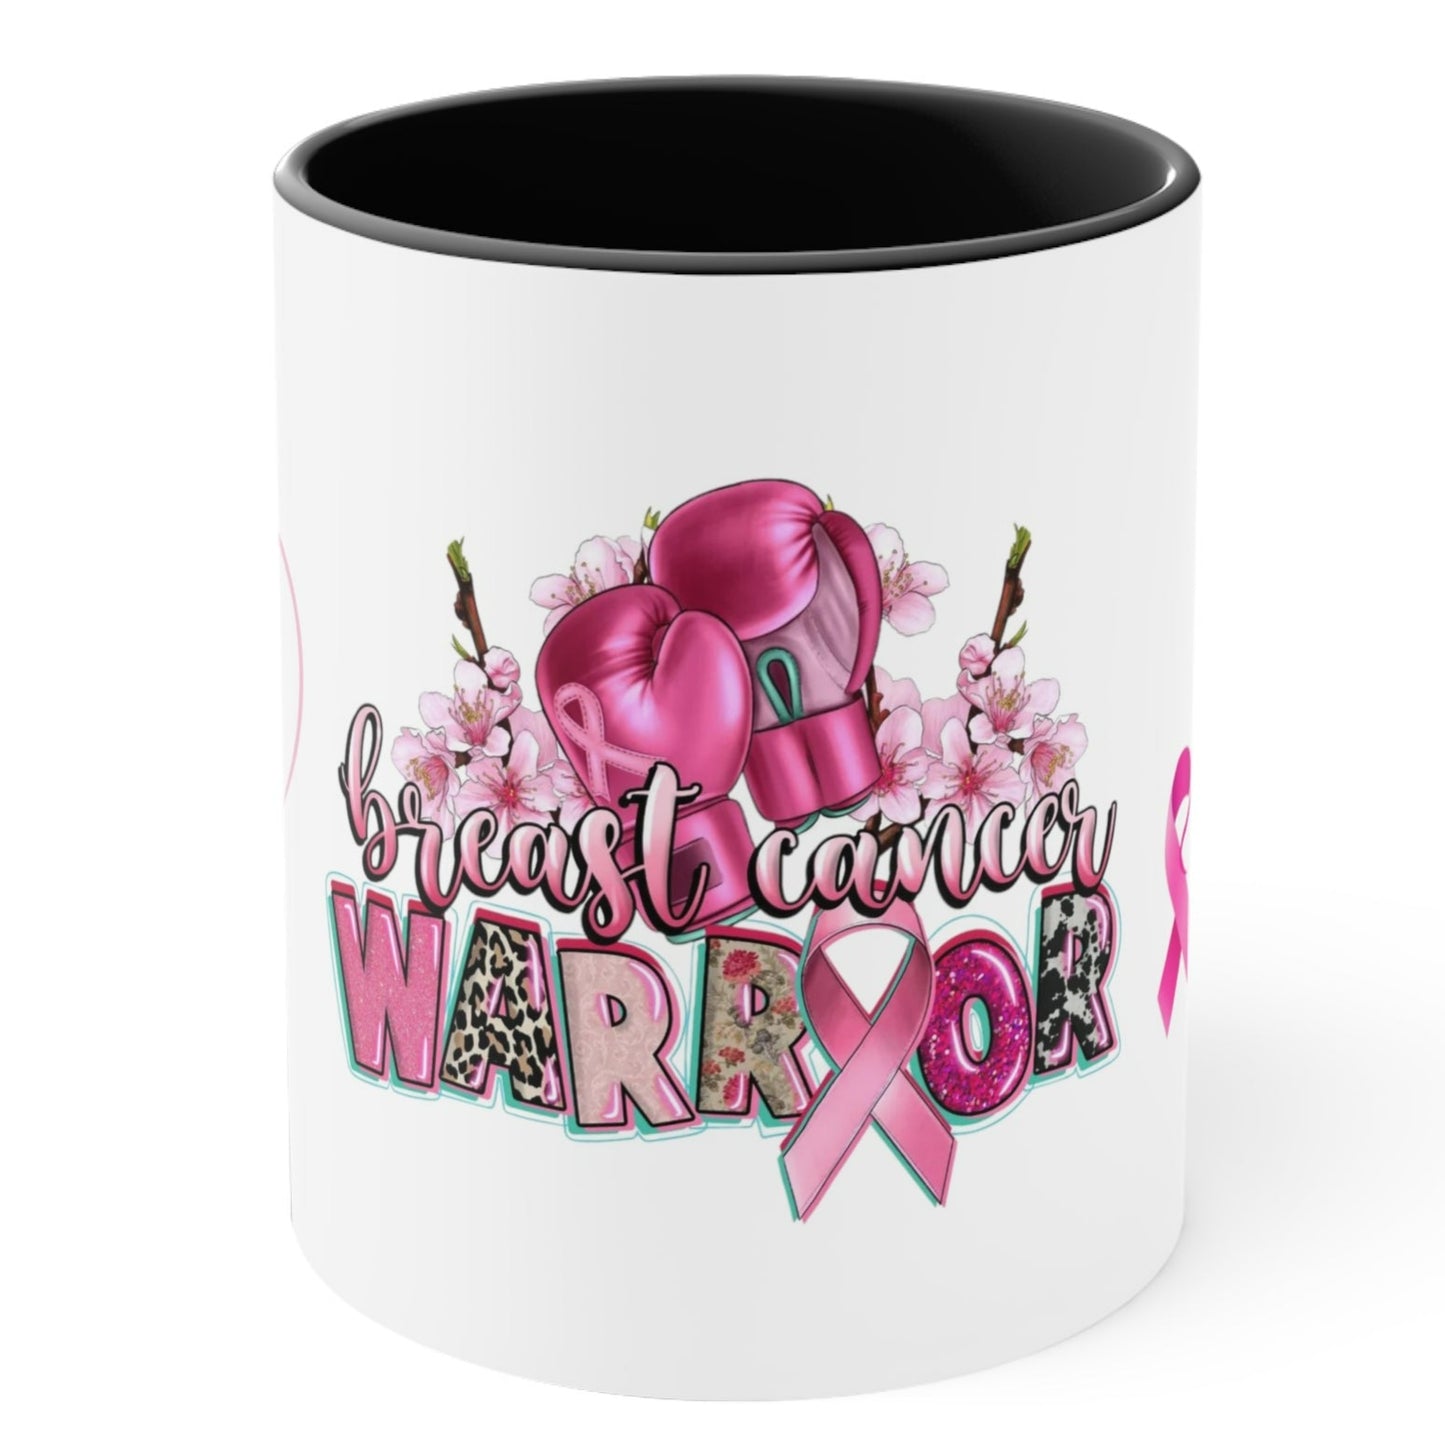 BREAST CANCER WARRIOR Mug - Pink, Red or Black accents in mug - MUGSCITY - Free Shipping